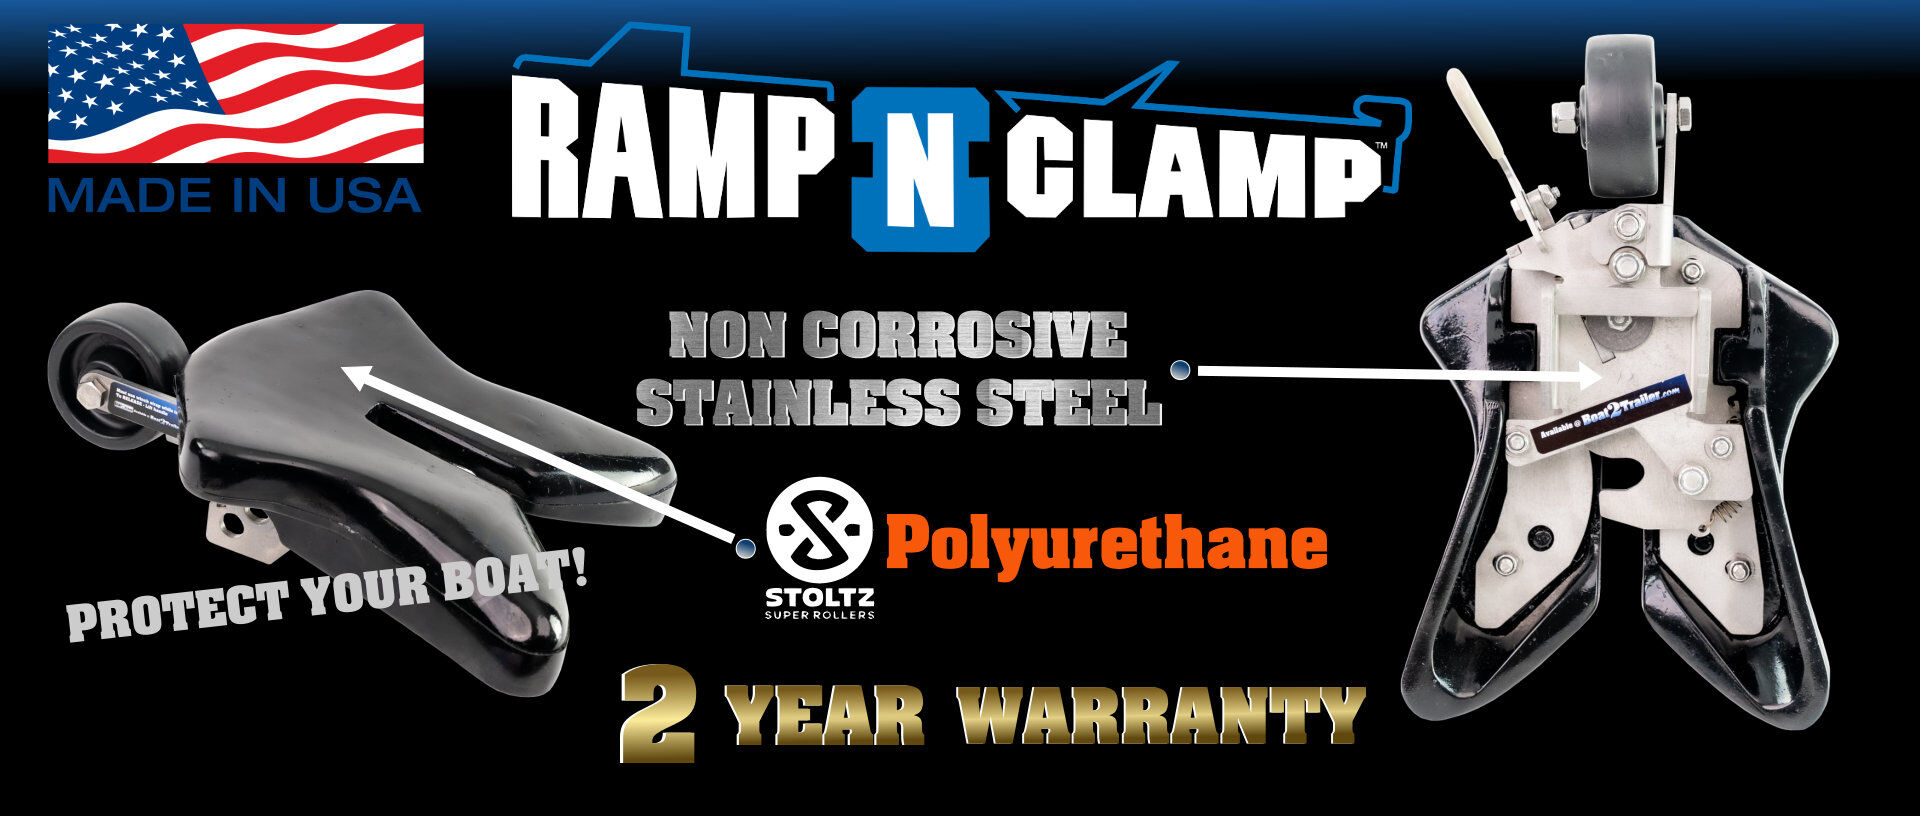 Ramp N Clamp Details Page